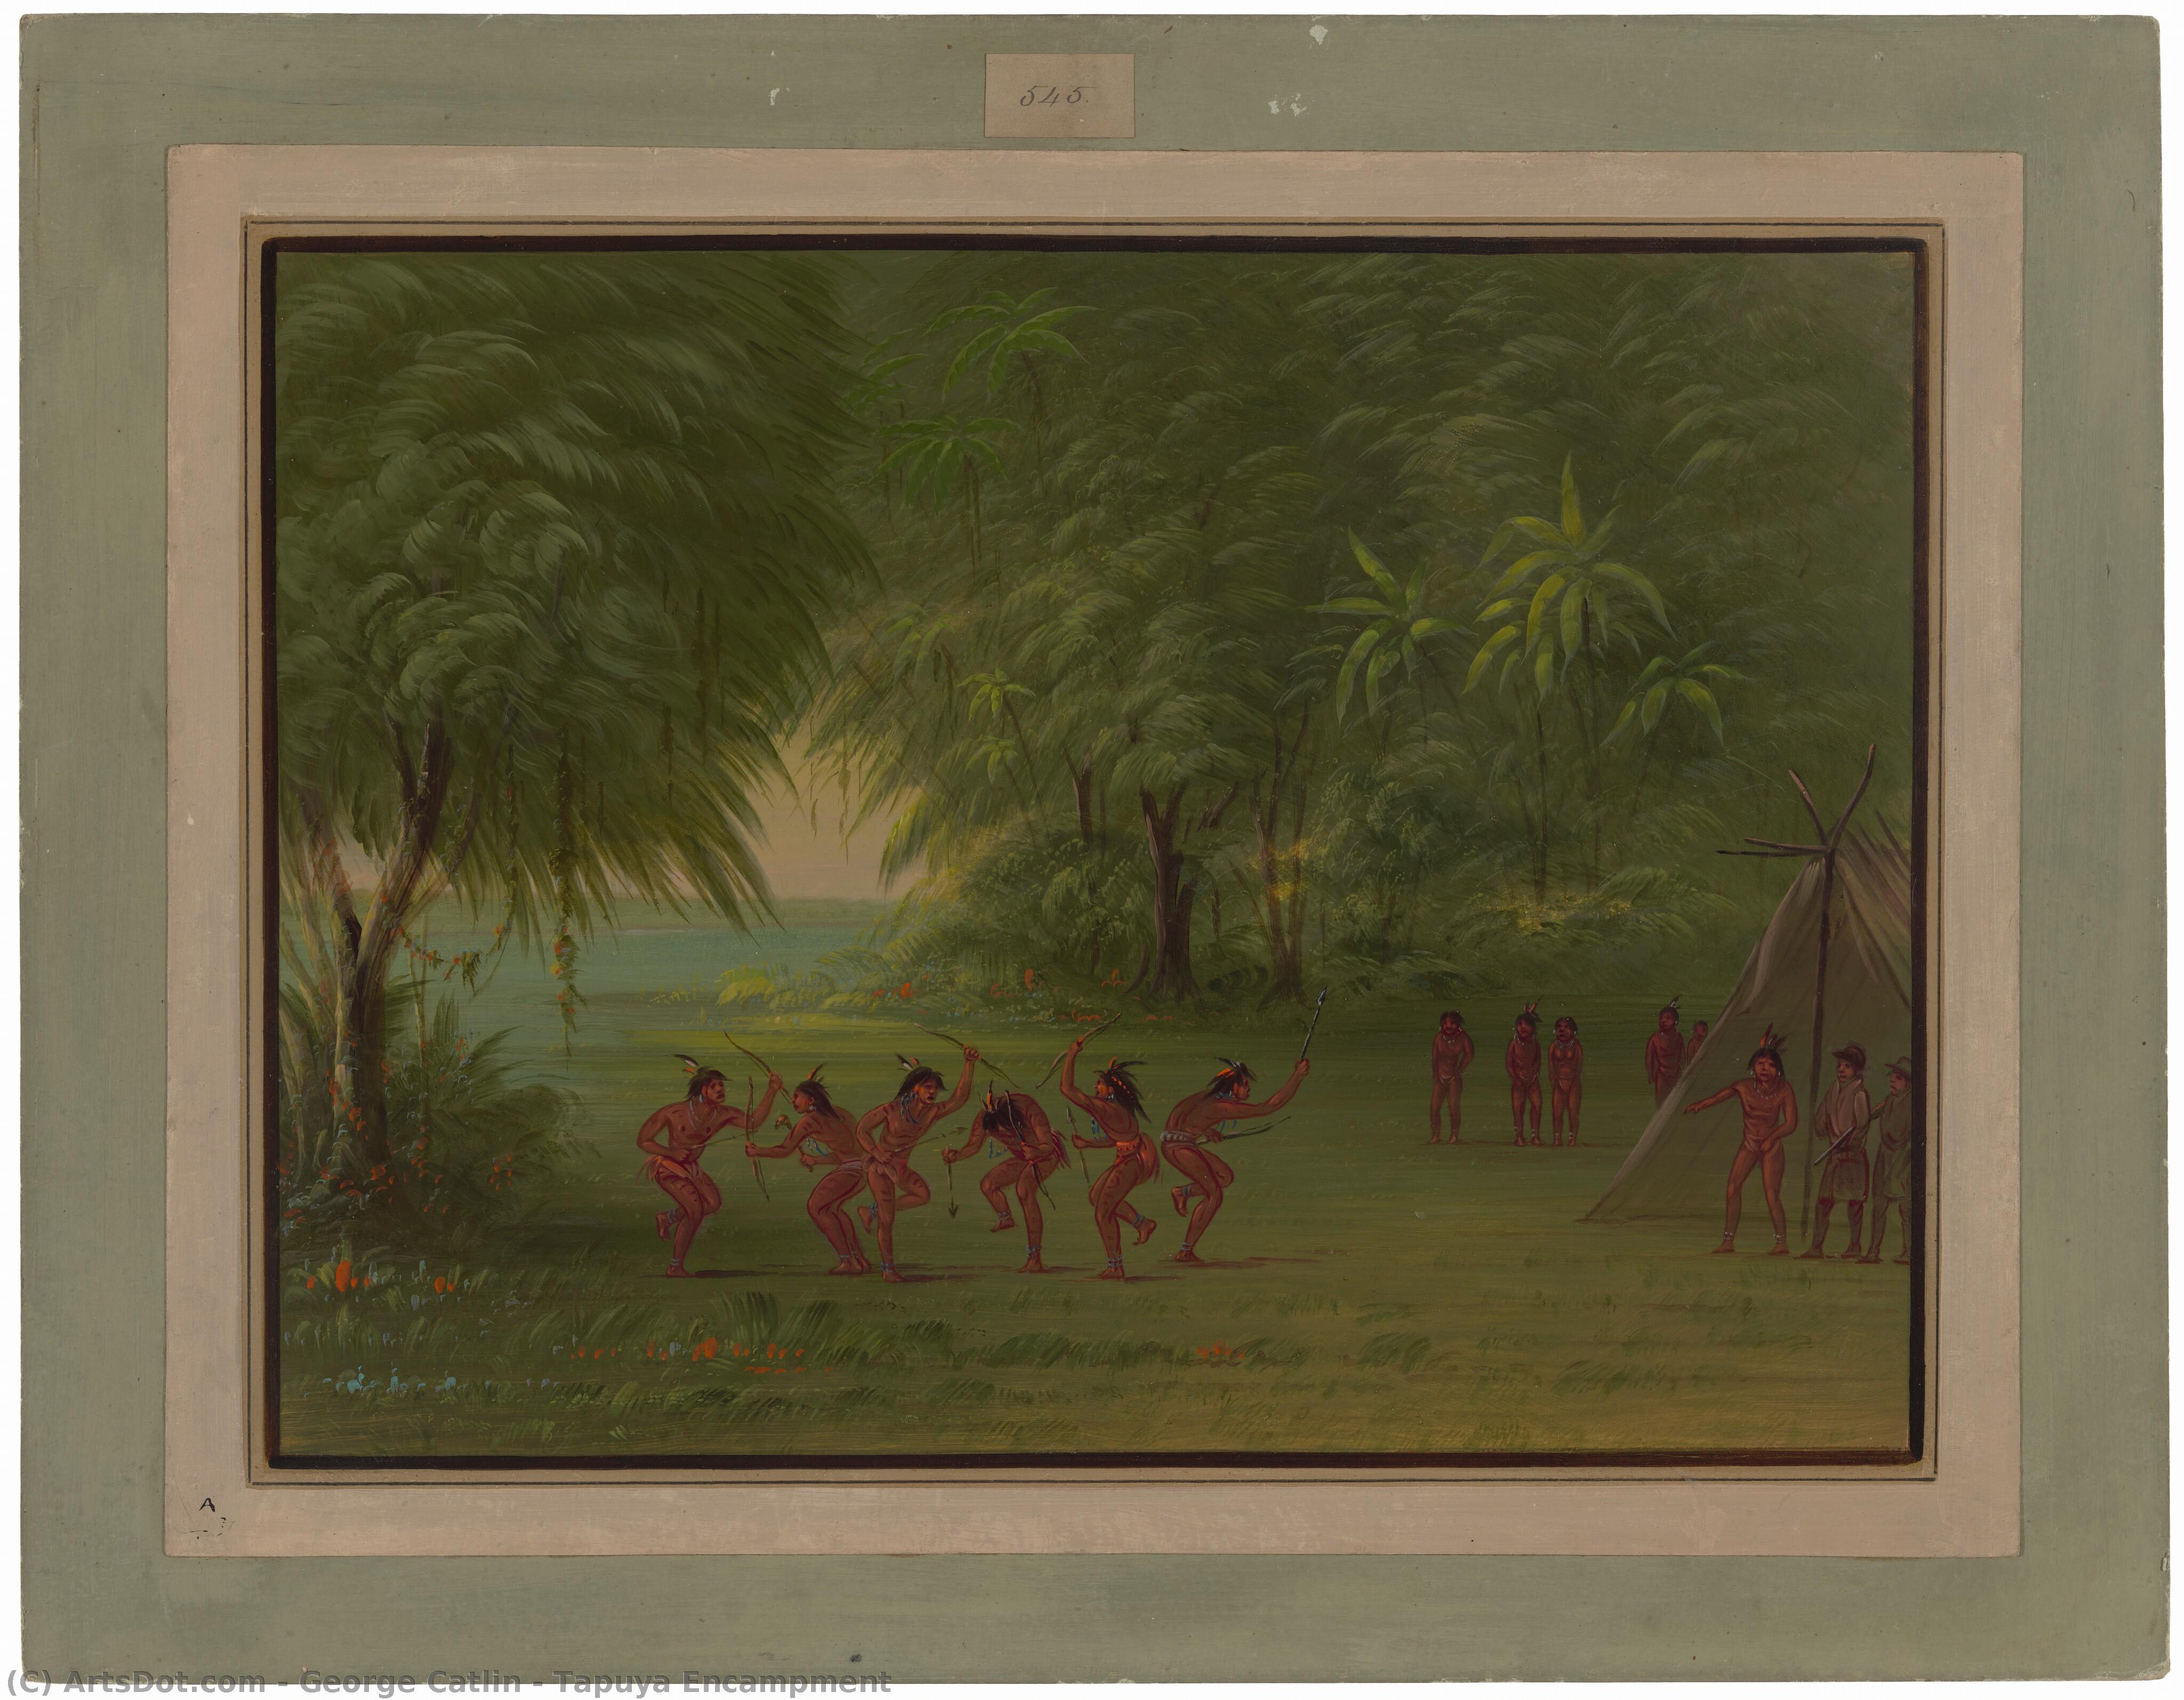  Museum Art Reproductions Tapuya Encampment, 1869 by George Catlin (1796-1872, United States) | ArtsDot.com